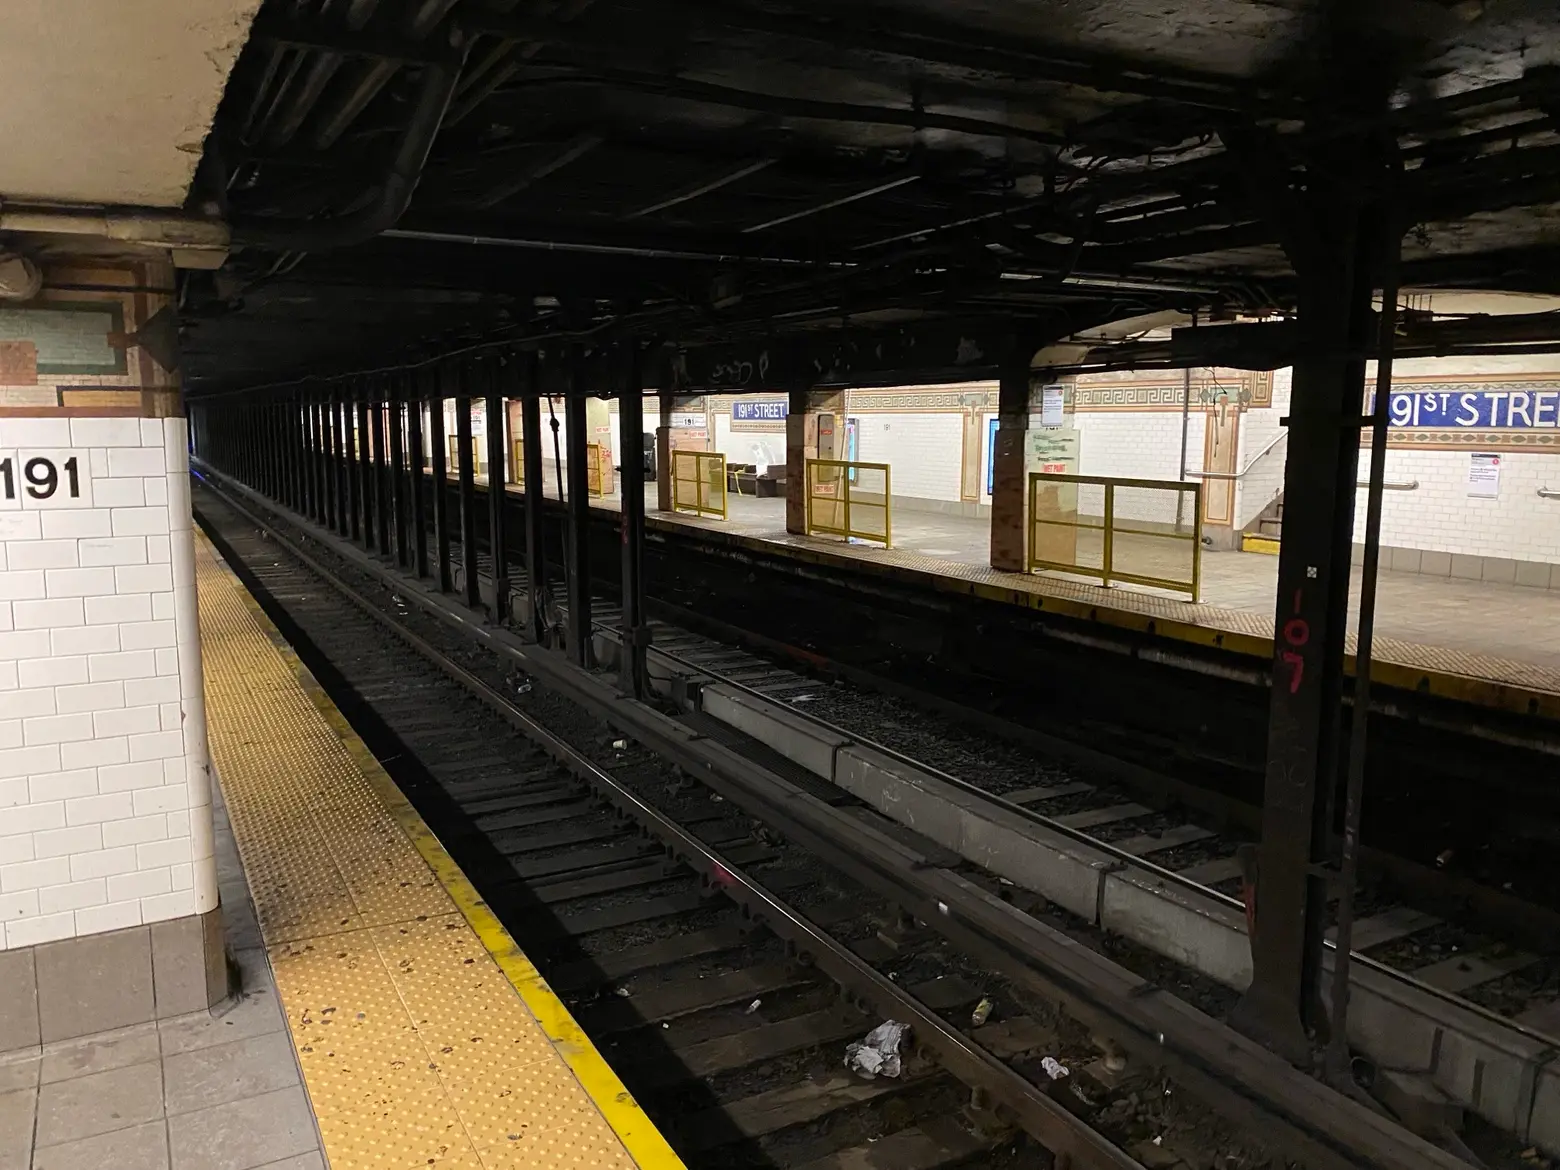 MTA installs new subway platform barriers at 191st Street station